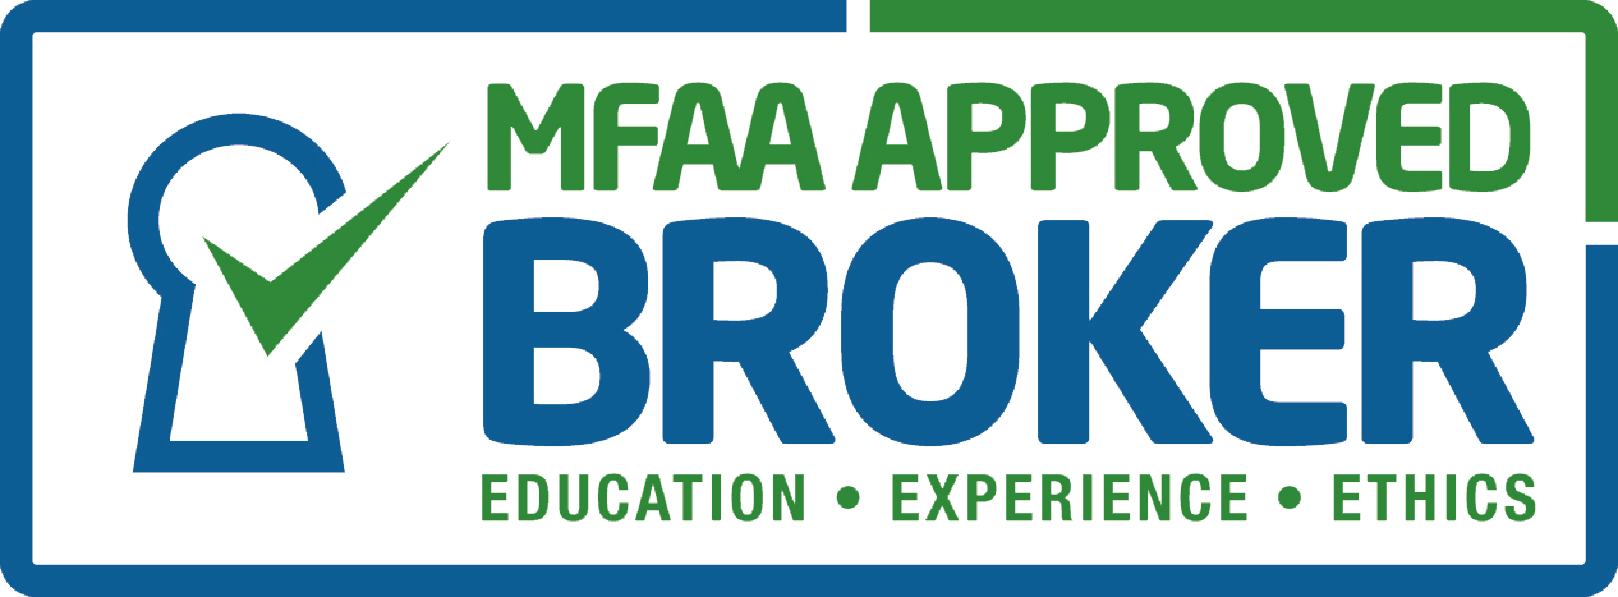 MFAA - Approved Broker